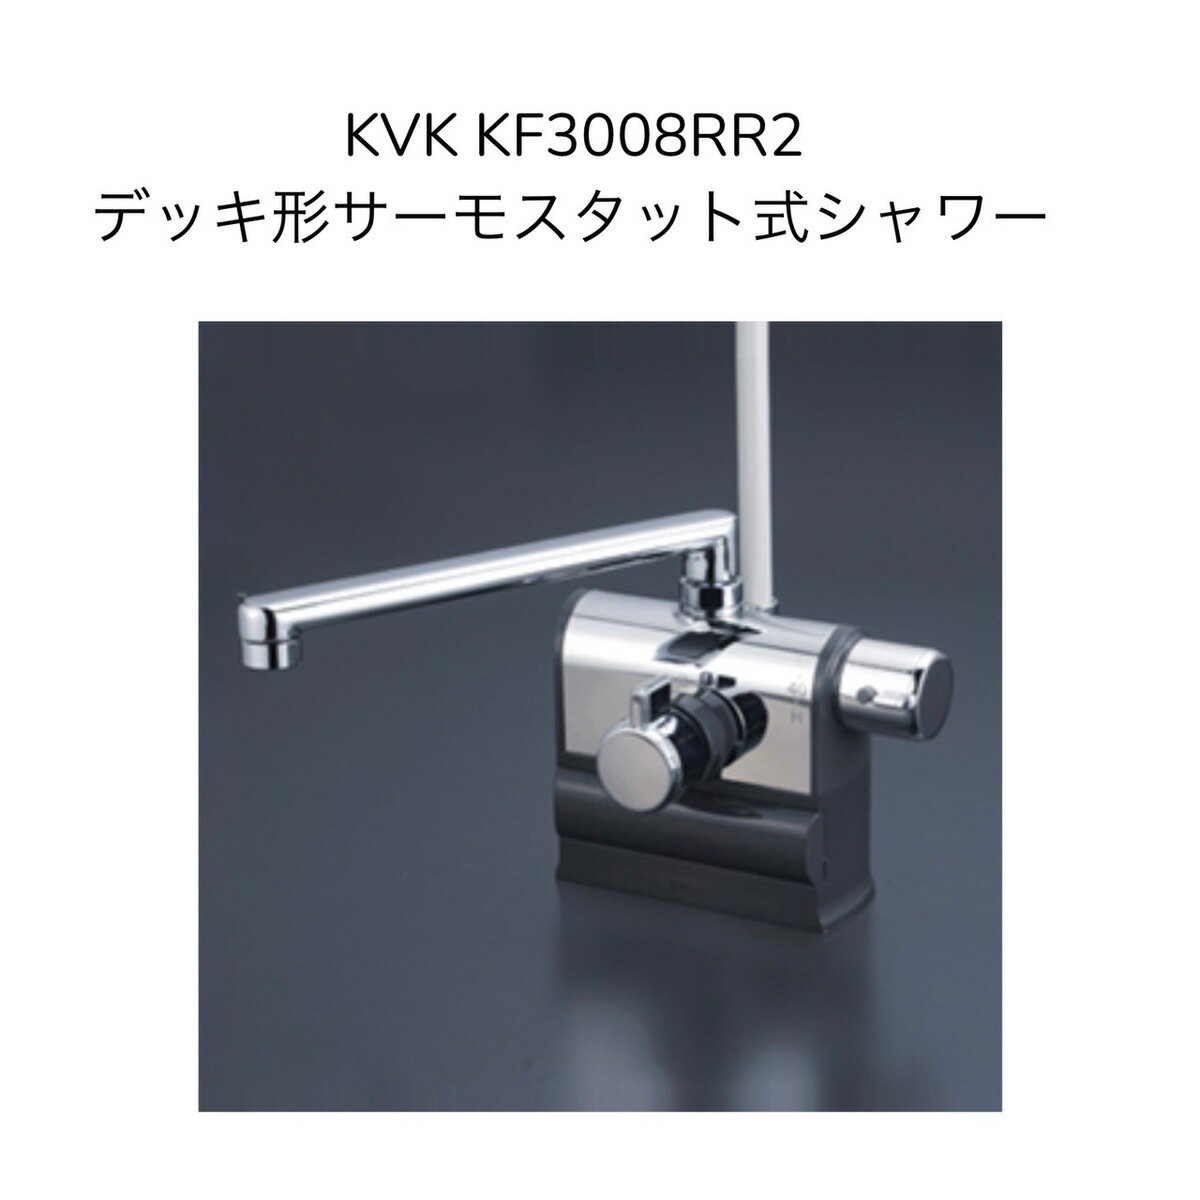 KVK KF3008RR2 デッキ形サーモスタット式シャワー 右ハンドル仕様 240mmパイプ付 取付穴径φ23~27対応 取付ピッチ85・100・125mm 可変ピッチタイプ シャワーホースグレー1.45m グレーハンガー 混合水栓 湯水